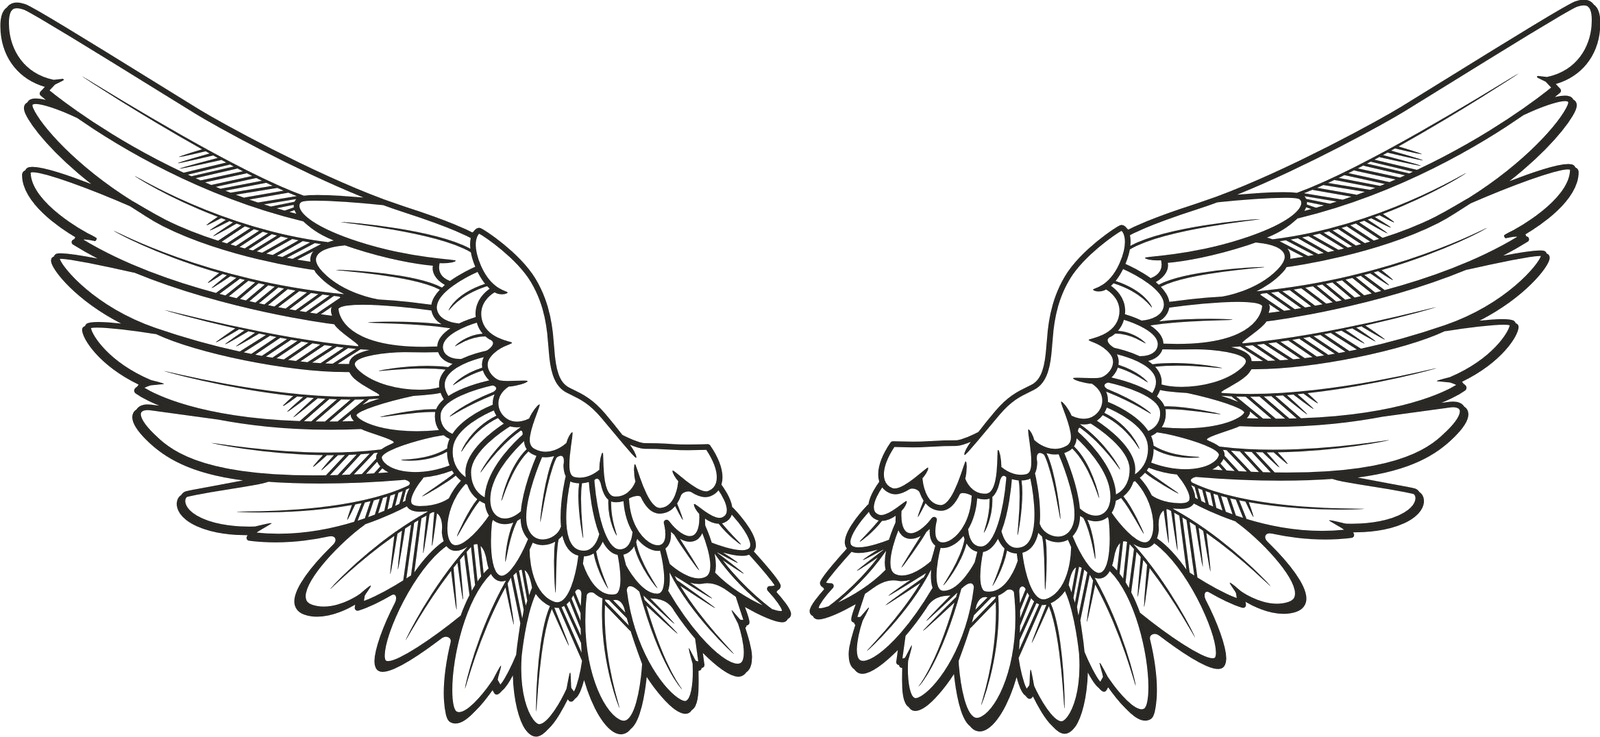 Angel Wings Transparent Image